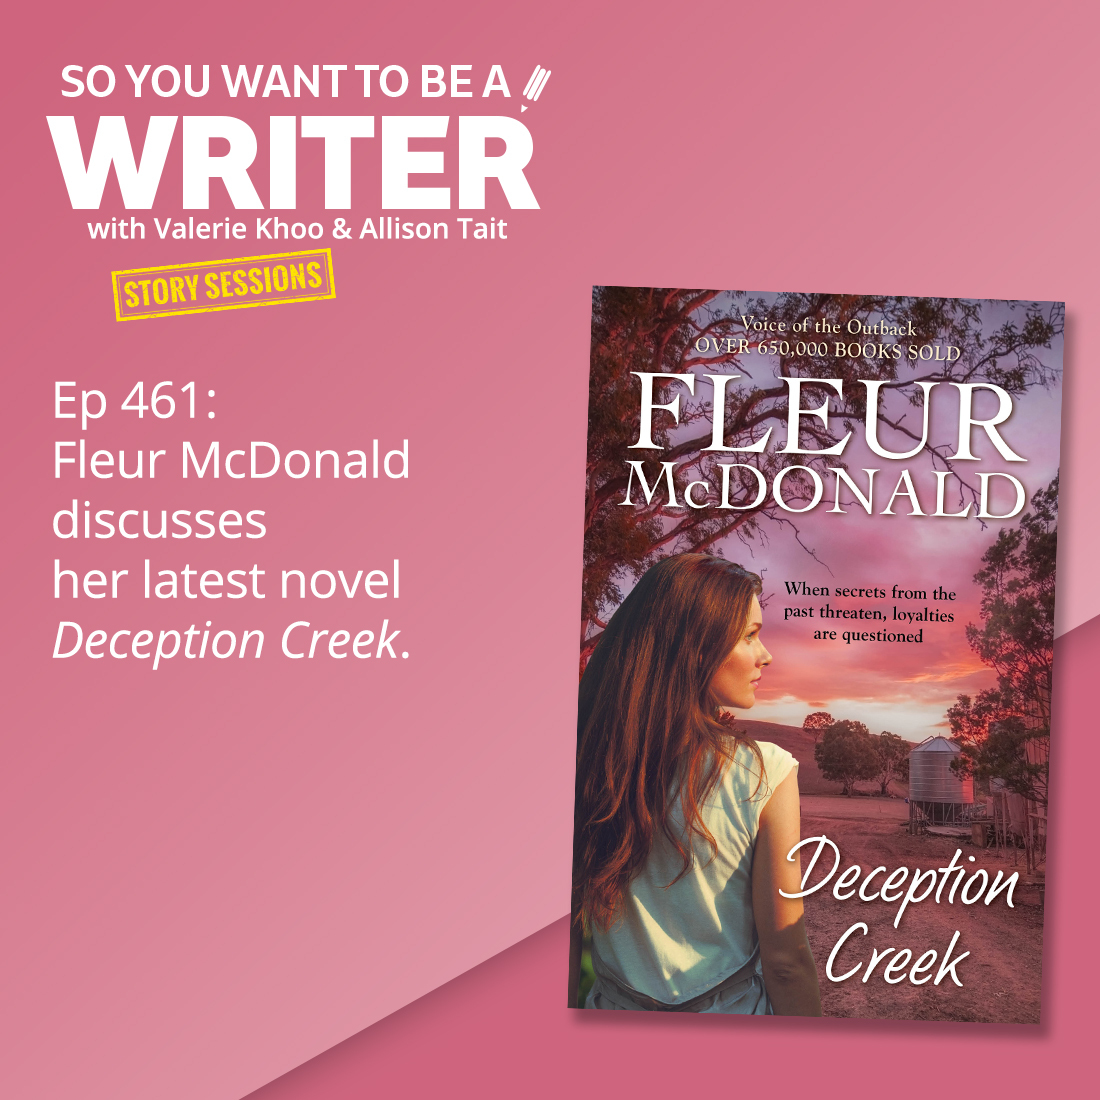 WRITER 461: Fleur McDonald discusses her latest novel 'Deception Creek' [Story Sessions series]